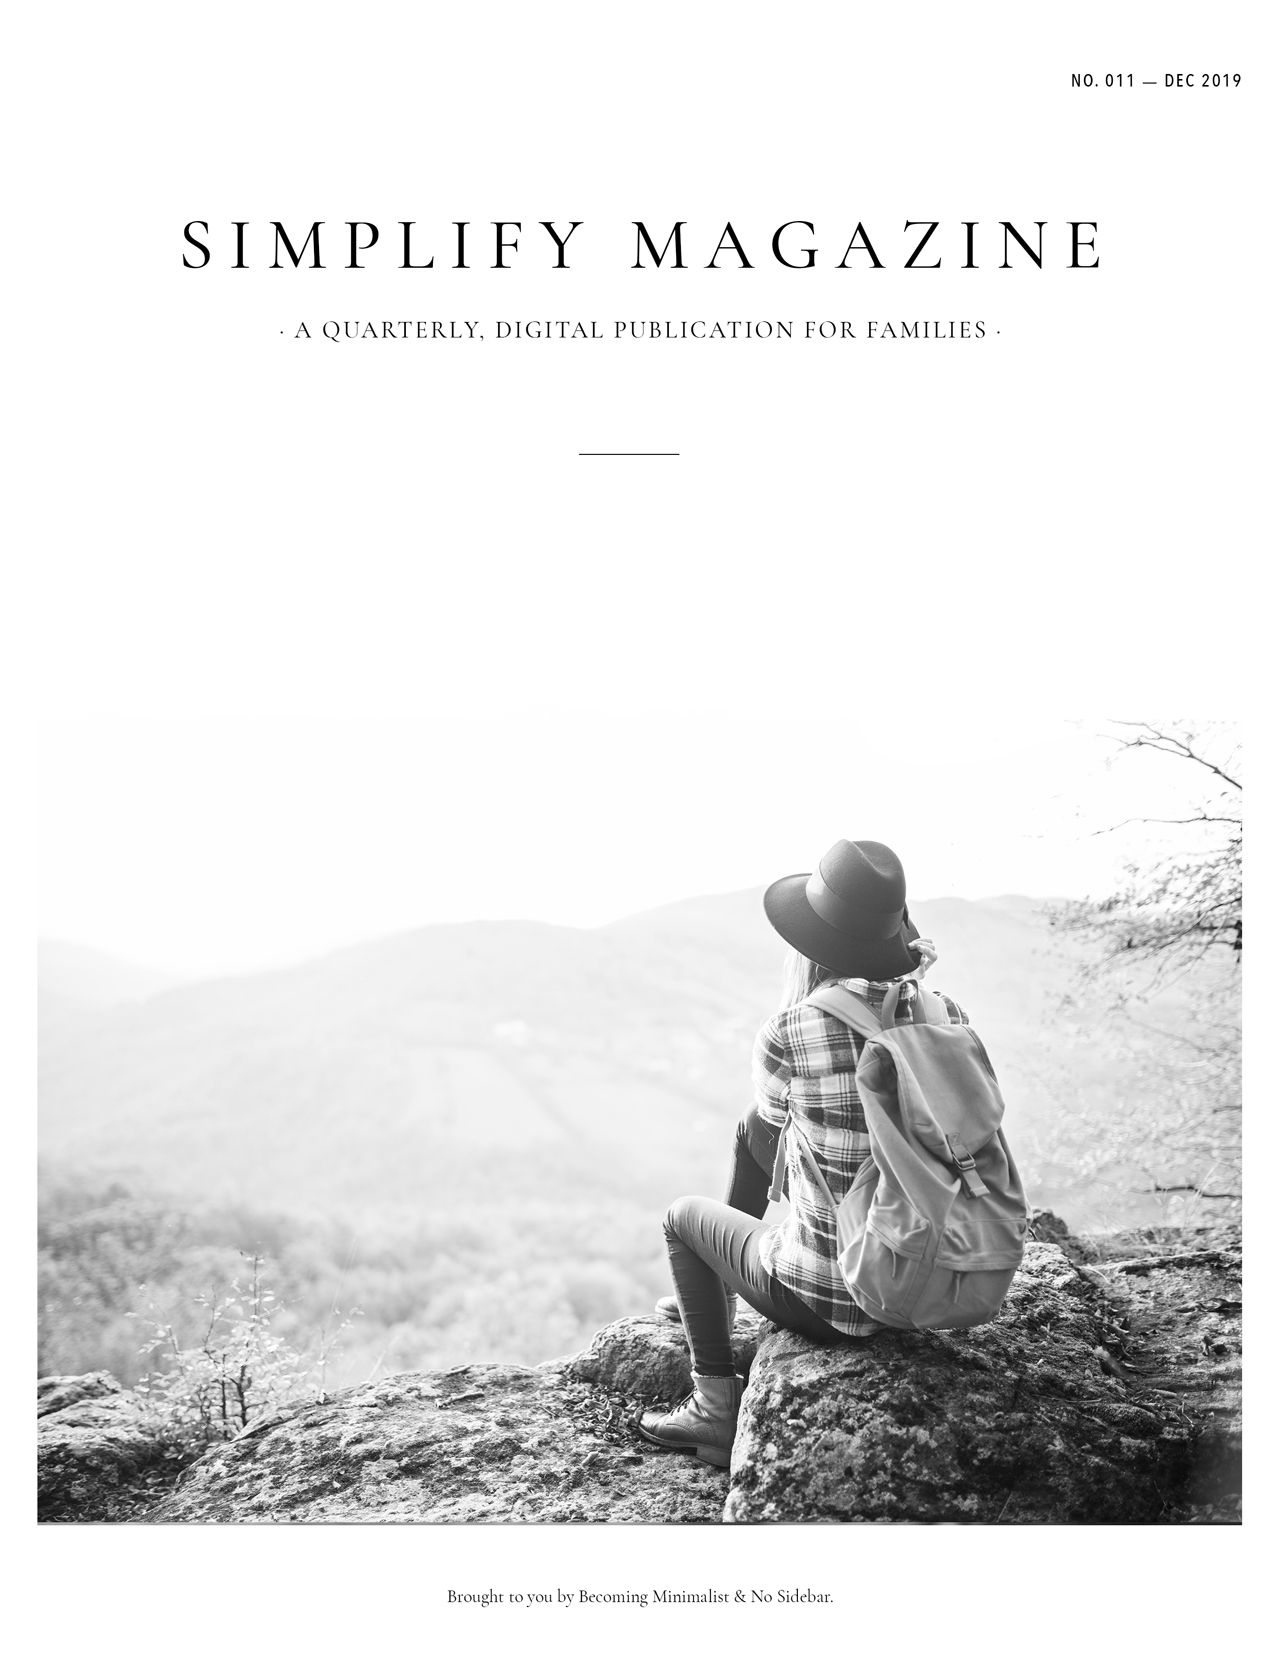 Simplify Magazine Issue #011